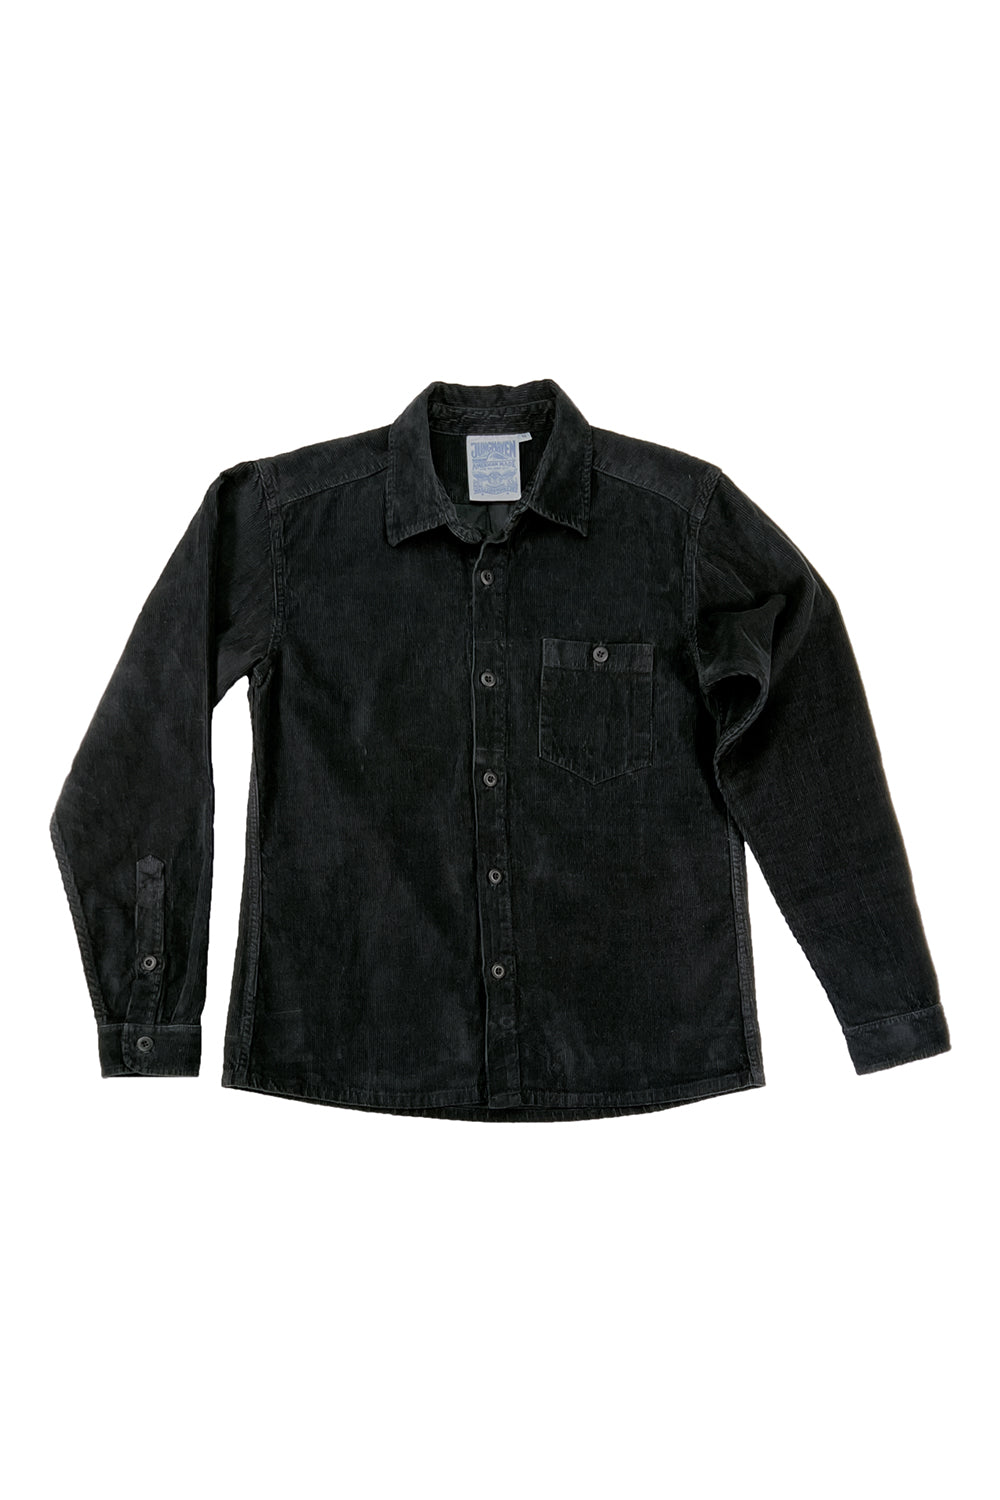 Ventura Shirt | Jungmaven Hemp Clothing & Accessories / Color: Black